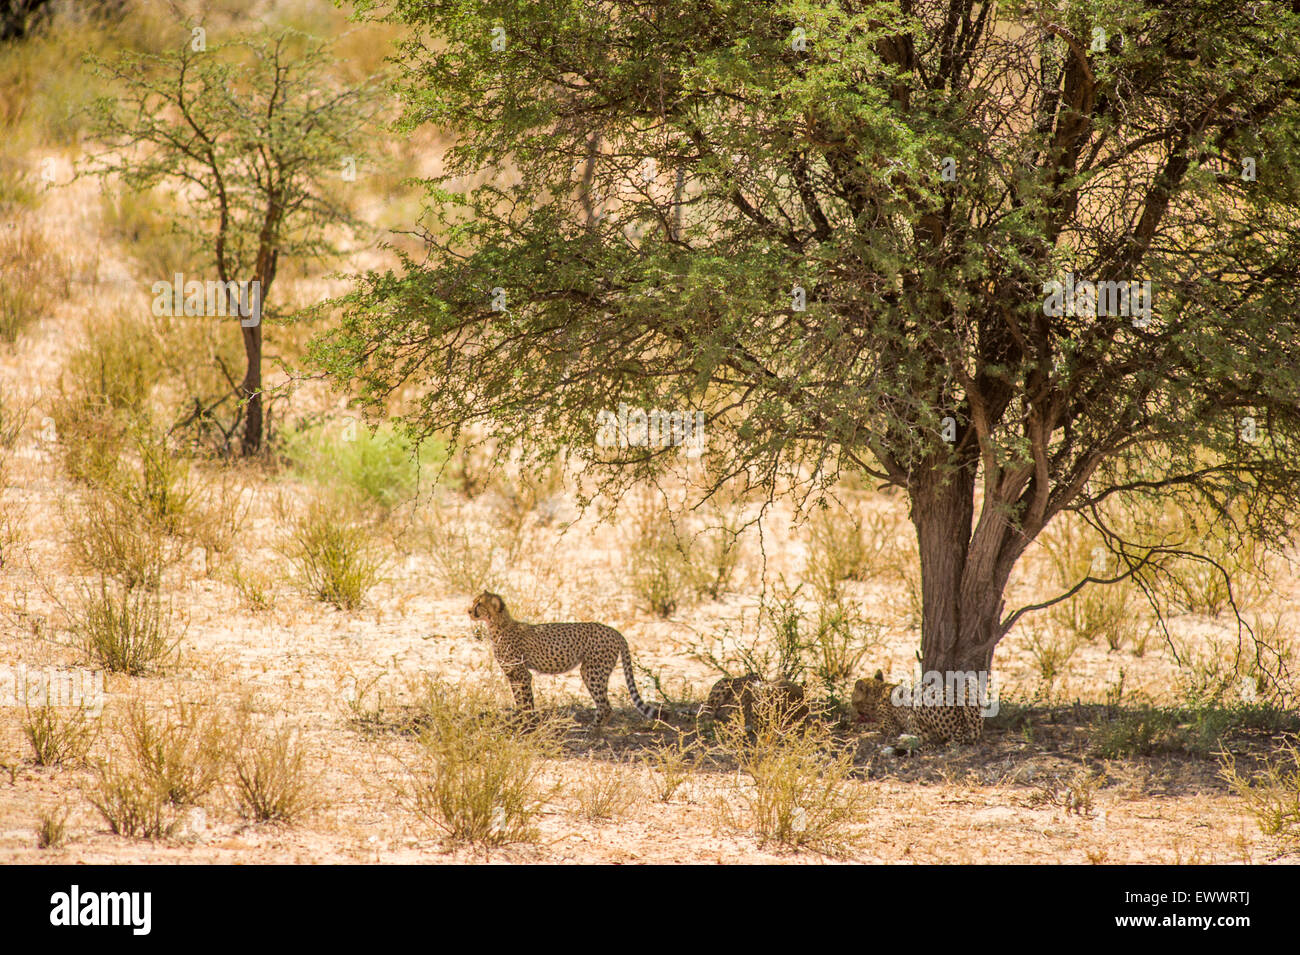 South Africa - Cheetah (Acinonyx jubatus) resting in the shade in Khalagadi Transfrontier Park Stock Photo